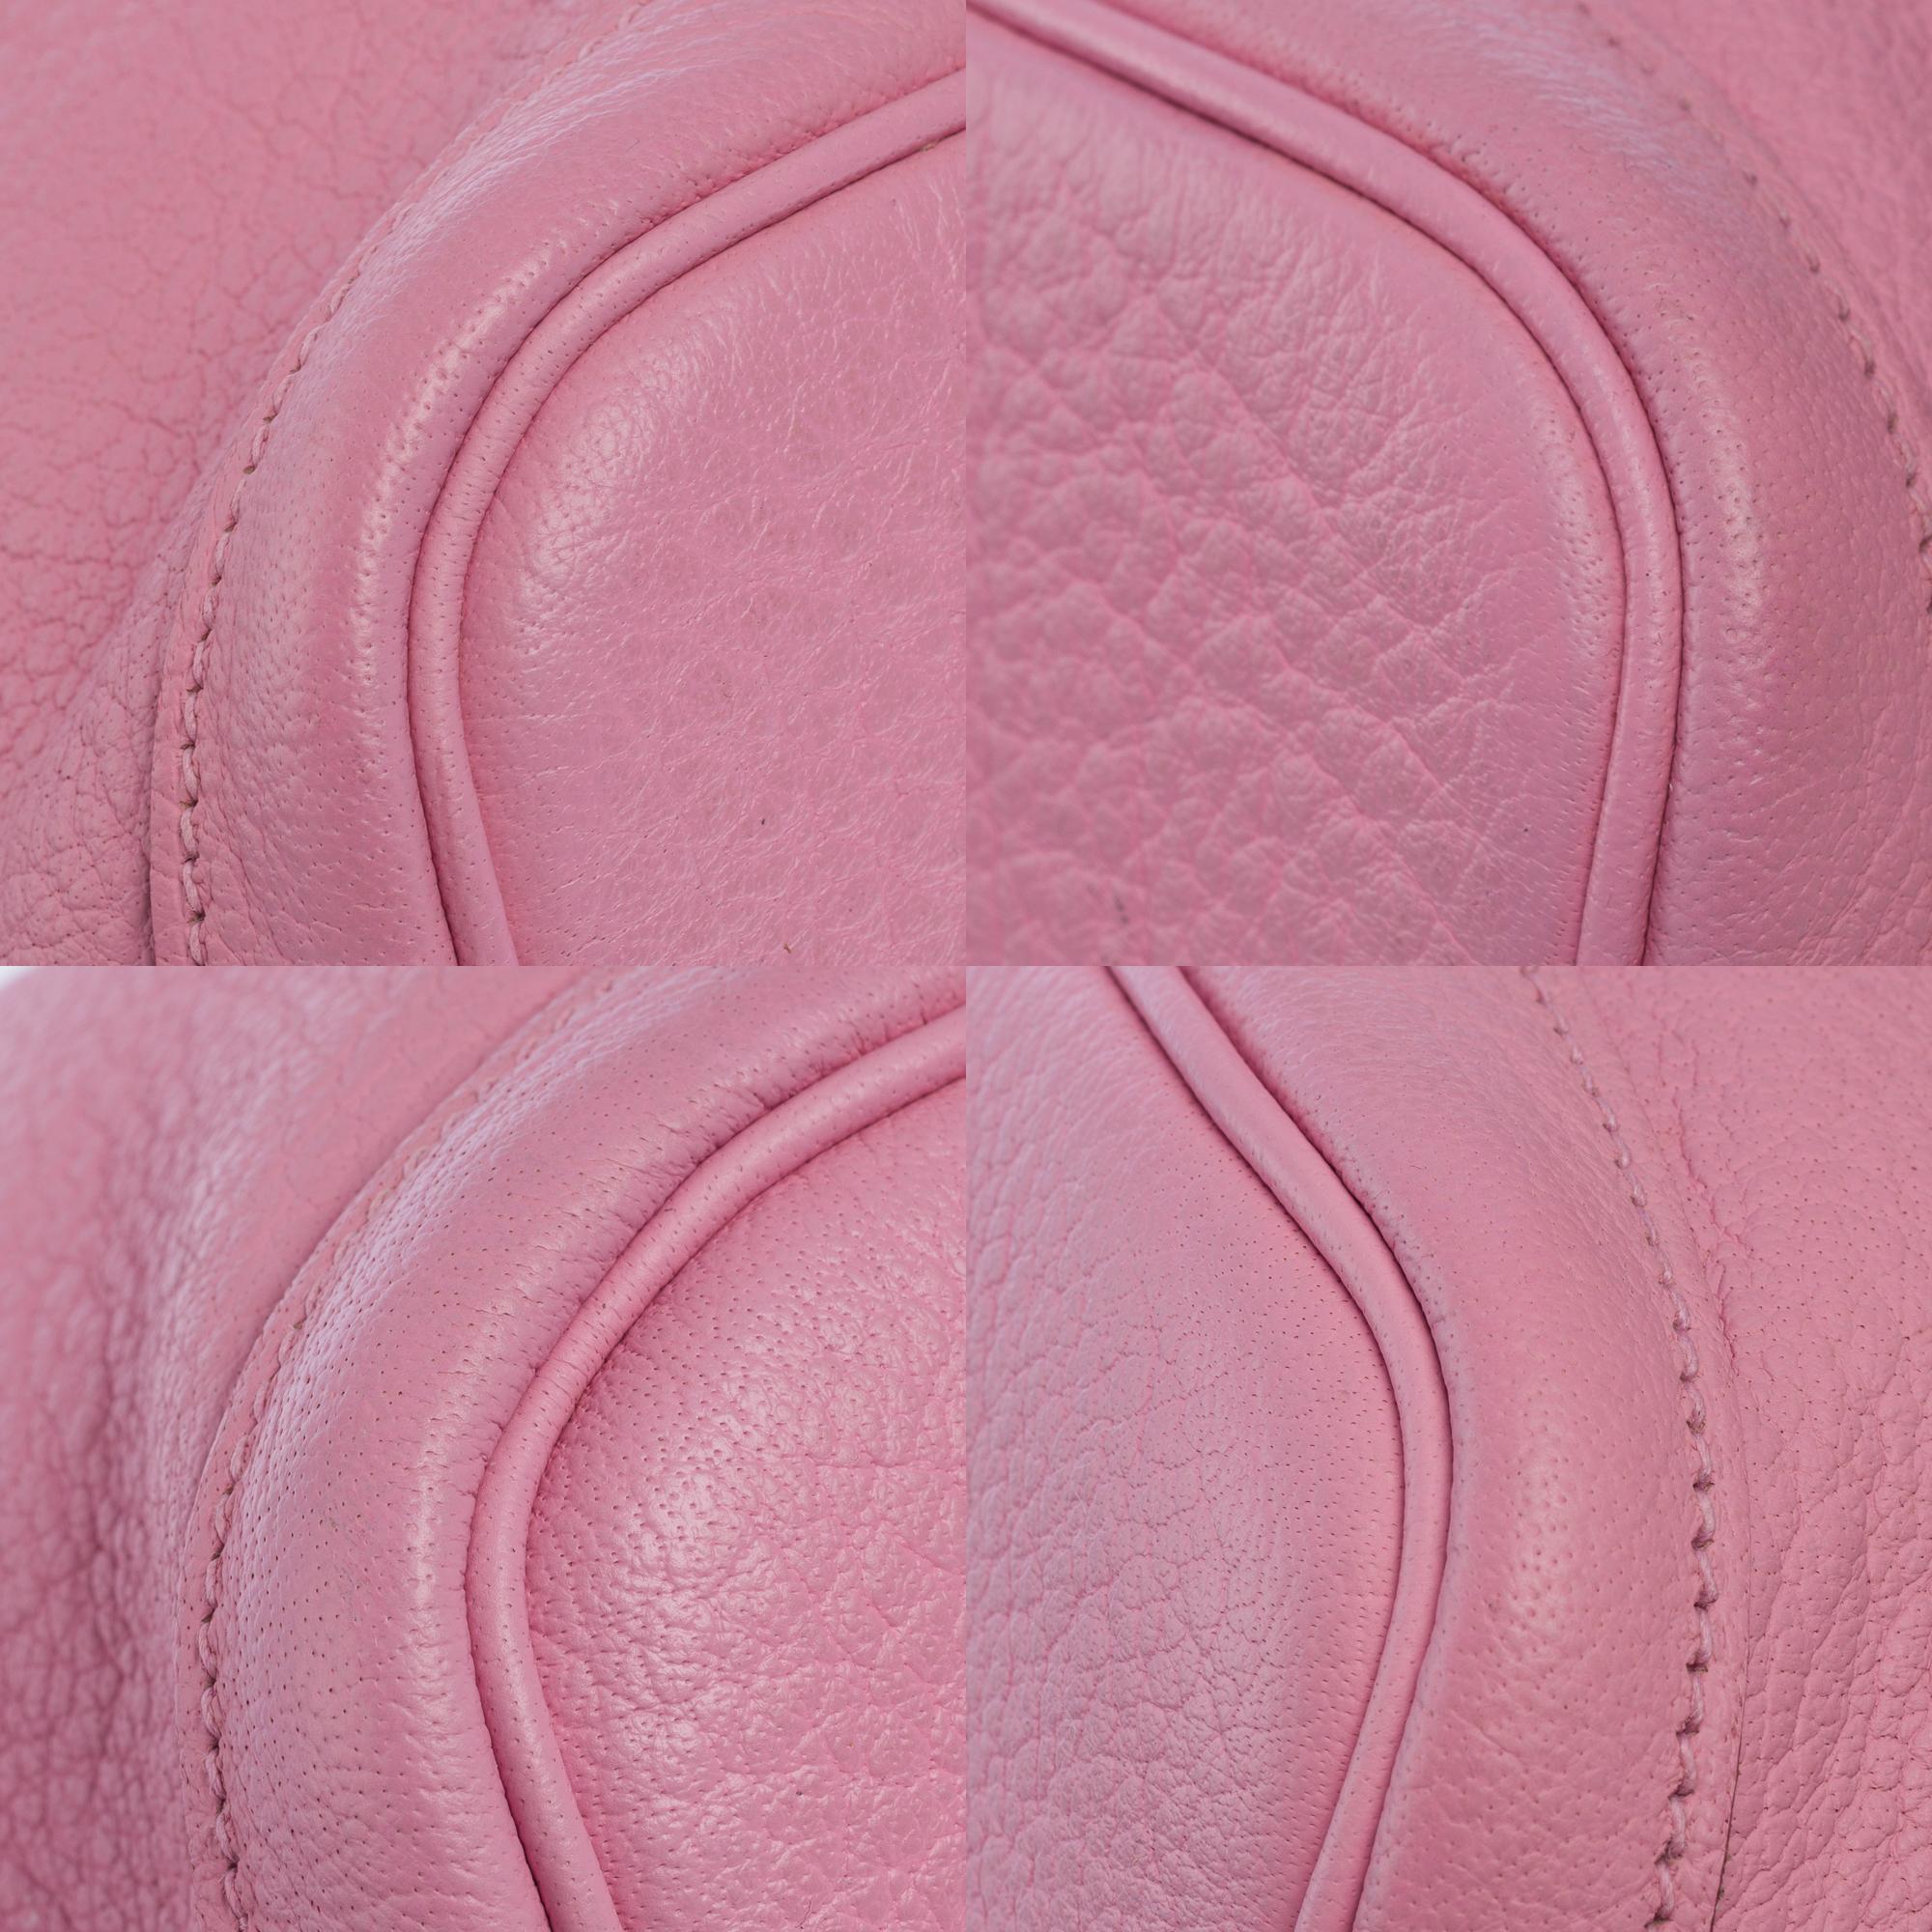 Gorgeous Hermès Garden Party 36 Tote bag in Sakura Pink Negonda leather, SHW 6